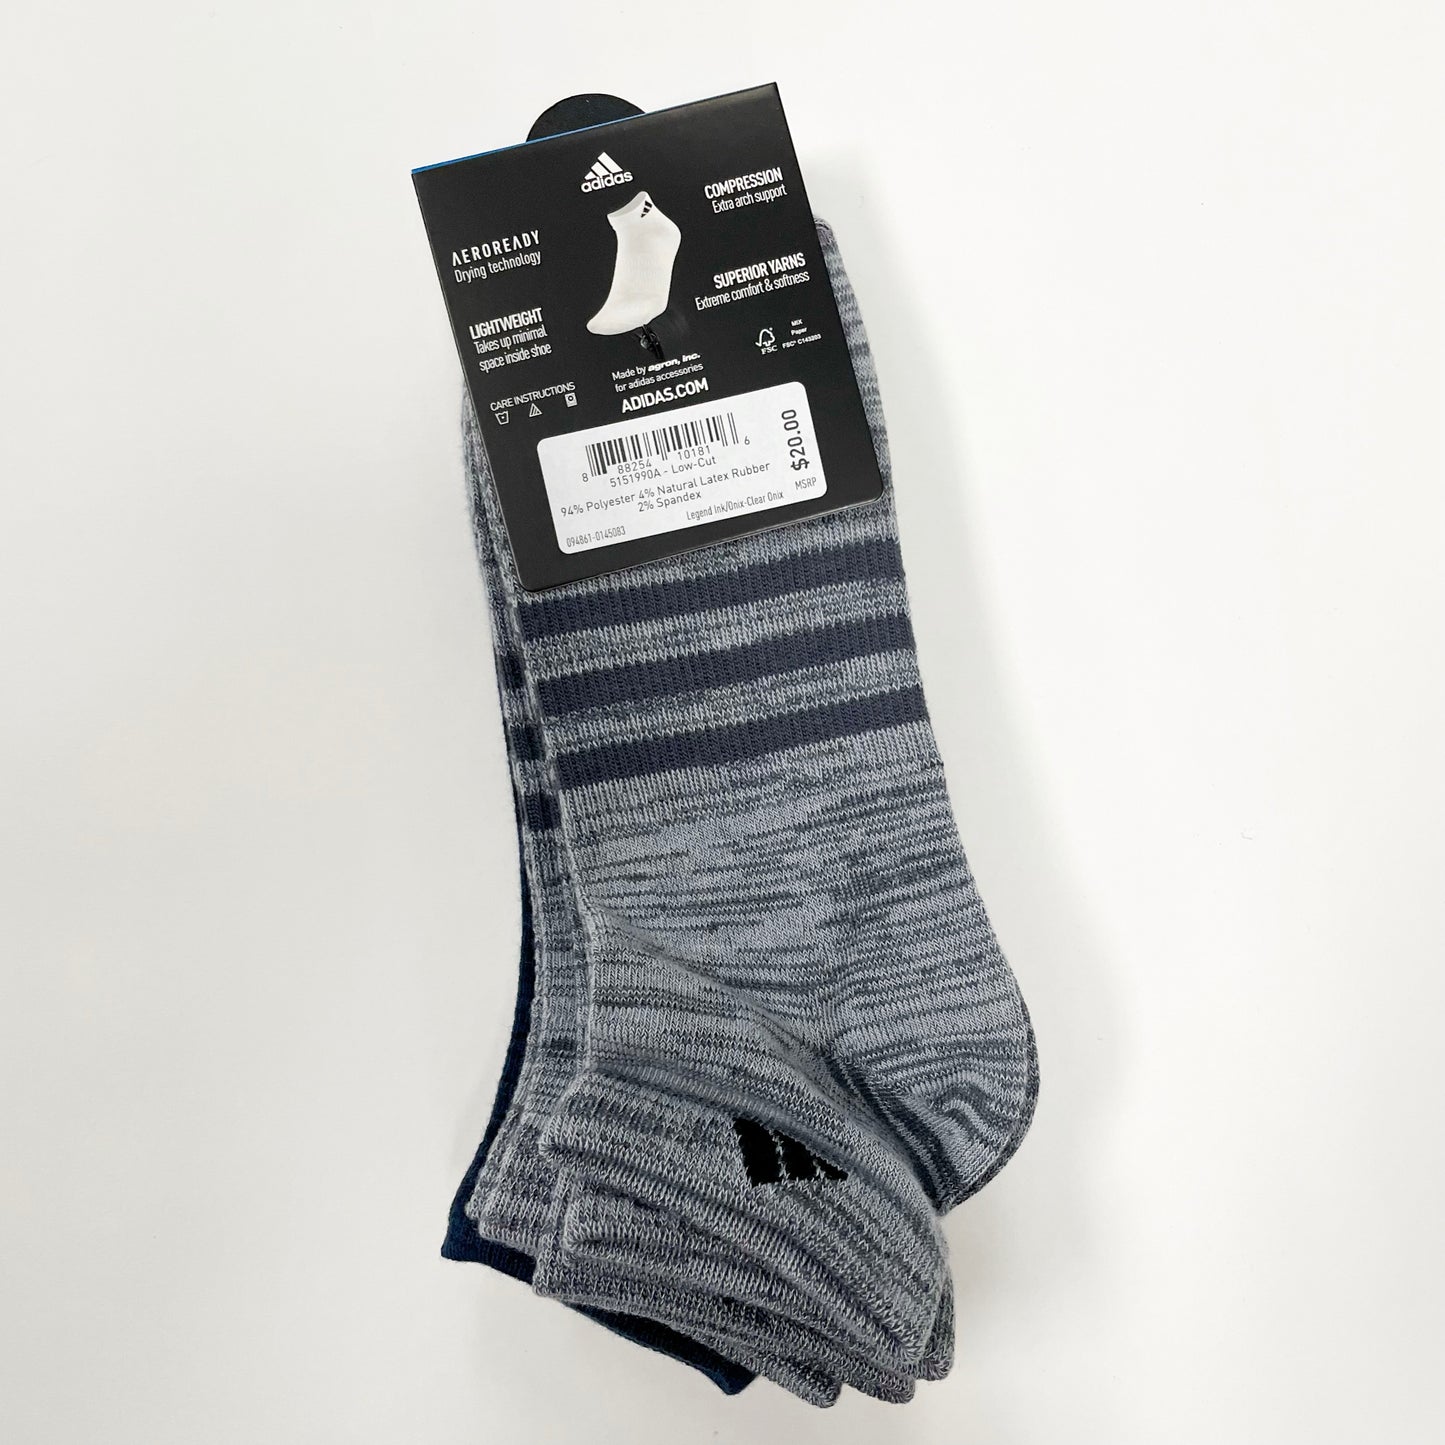 Adidas Men's Superlite low-cut 6 pairs socks